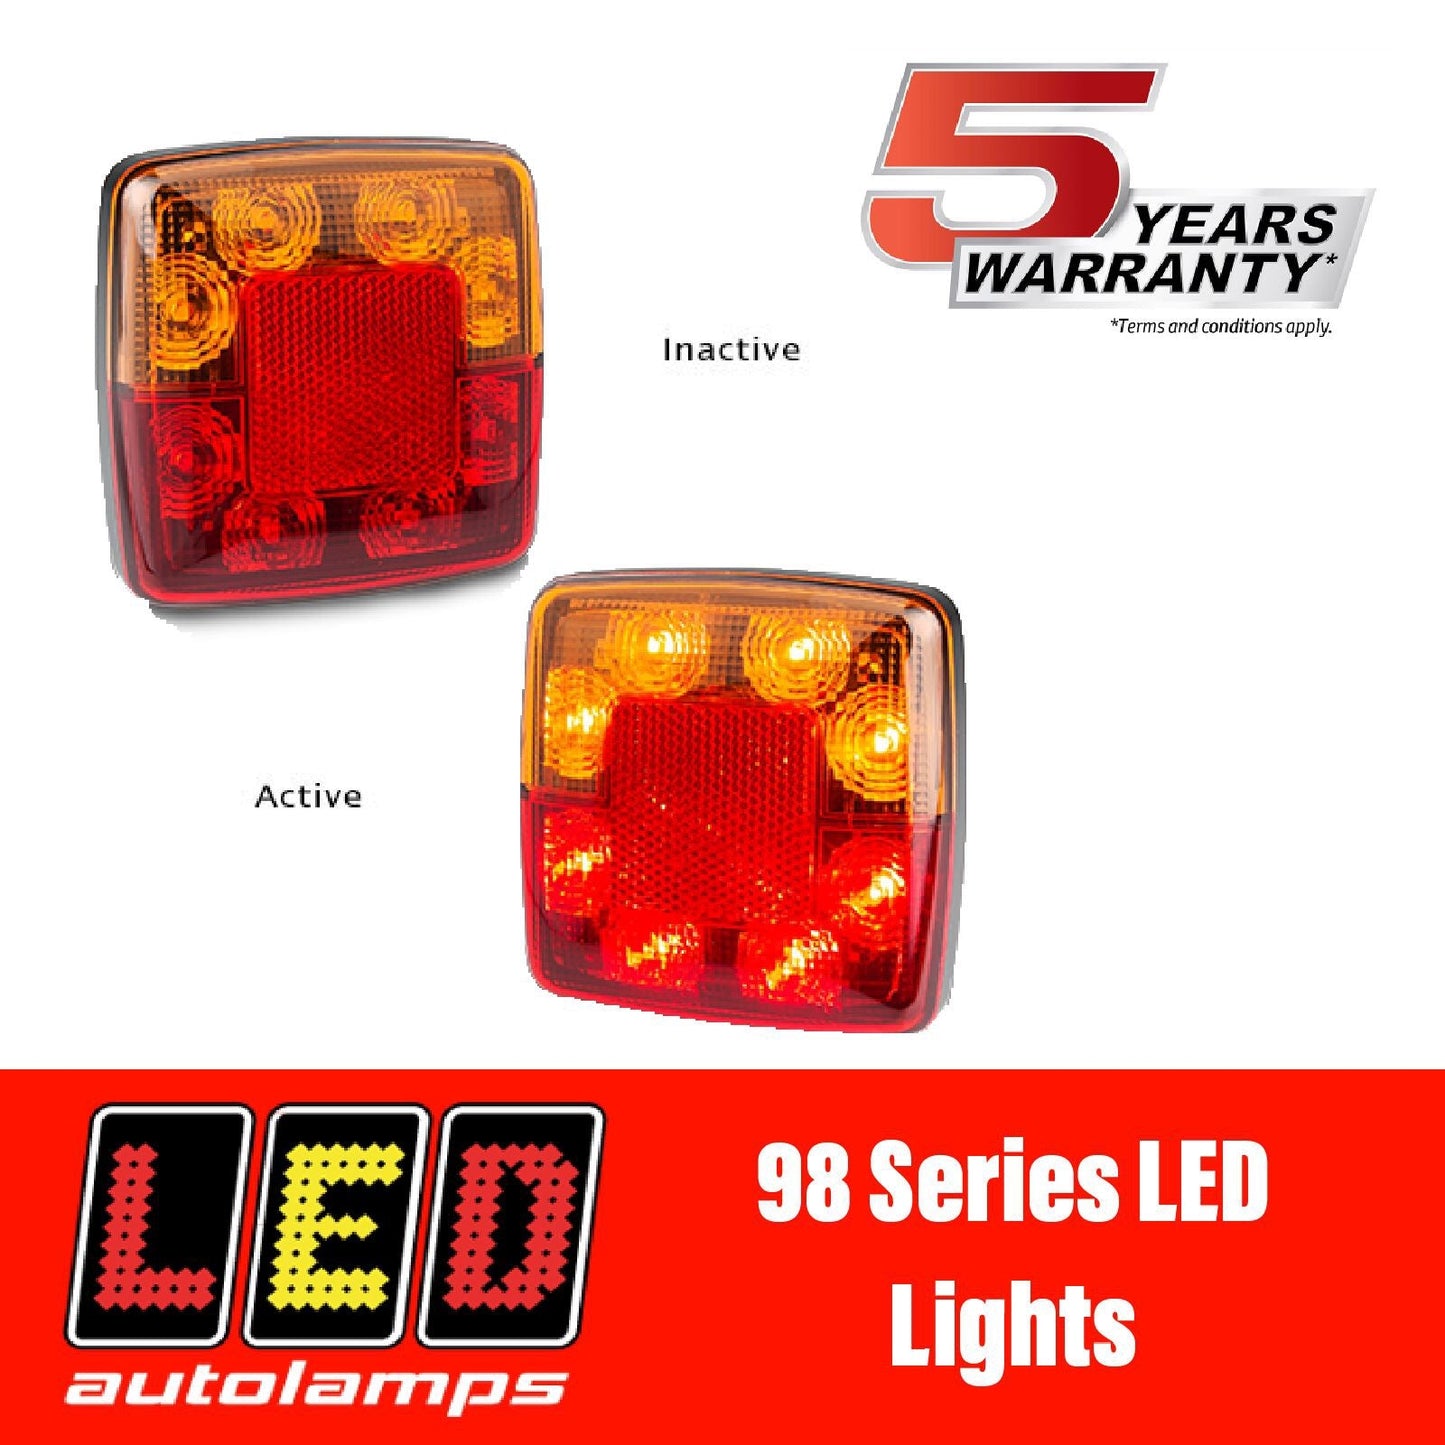 LED AUTOLAMPS 98 Series LED Lights